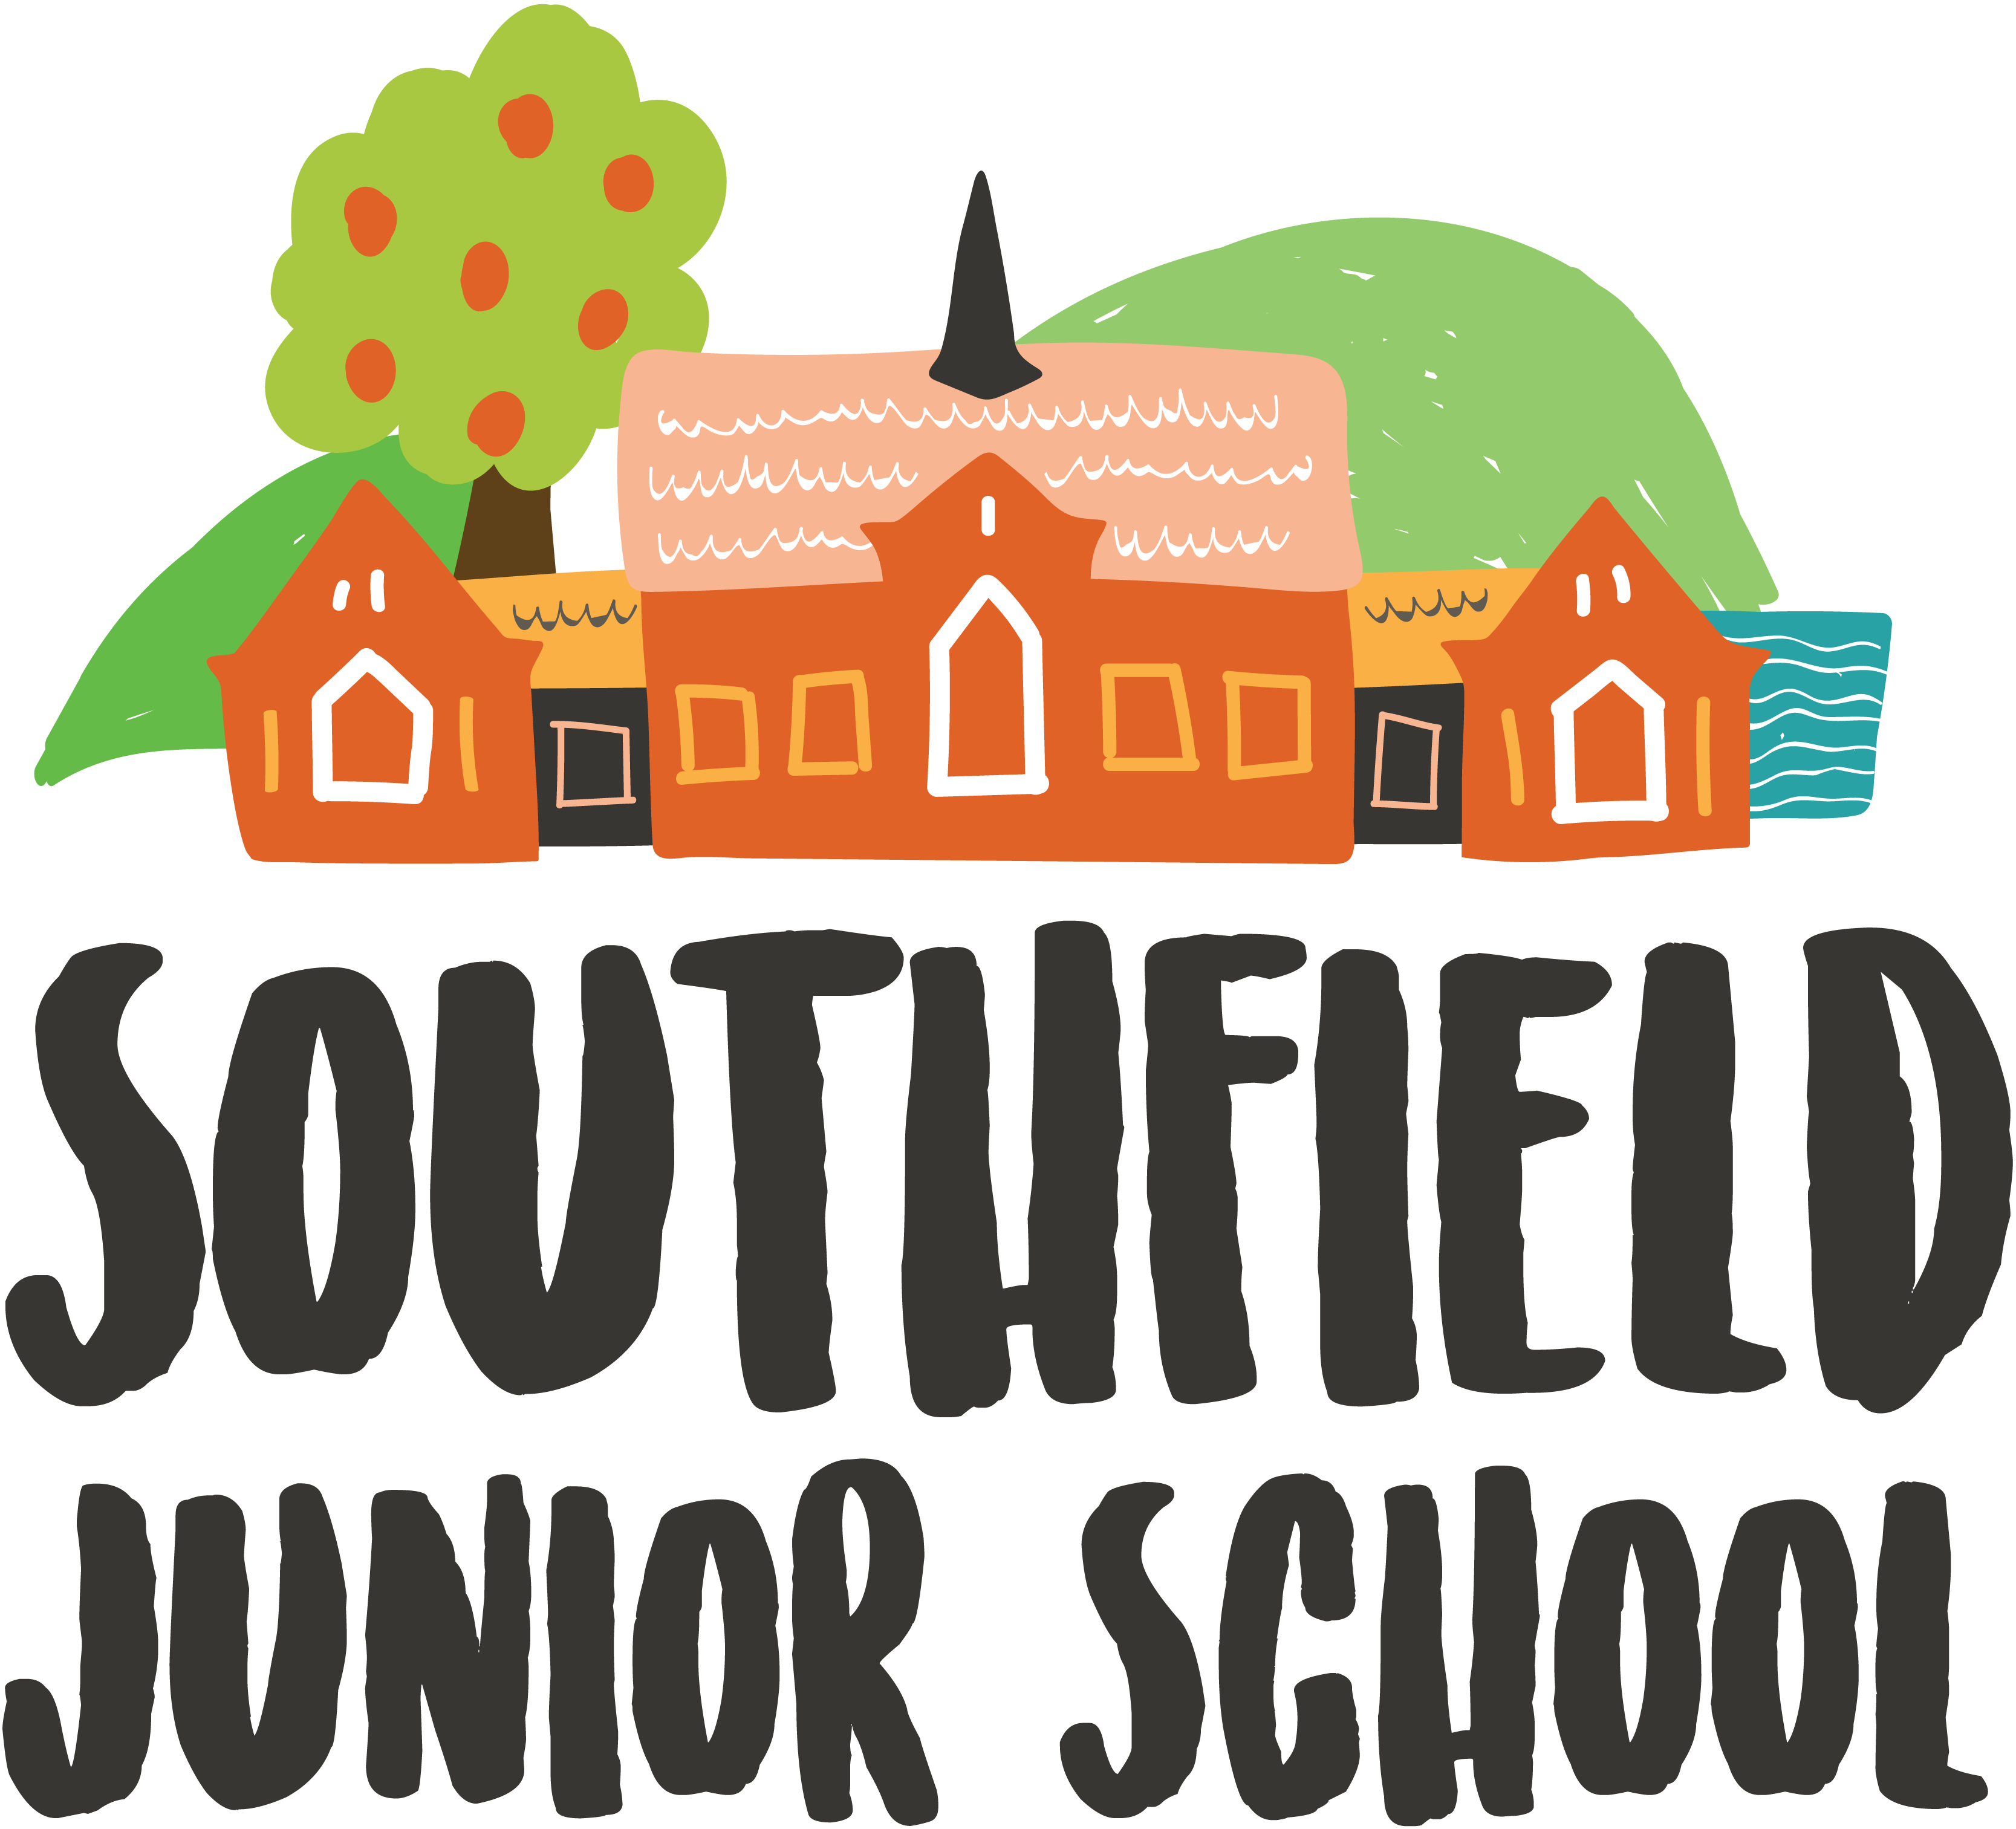 Southfield Junior School